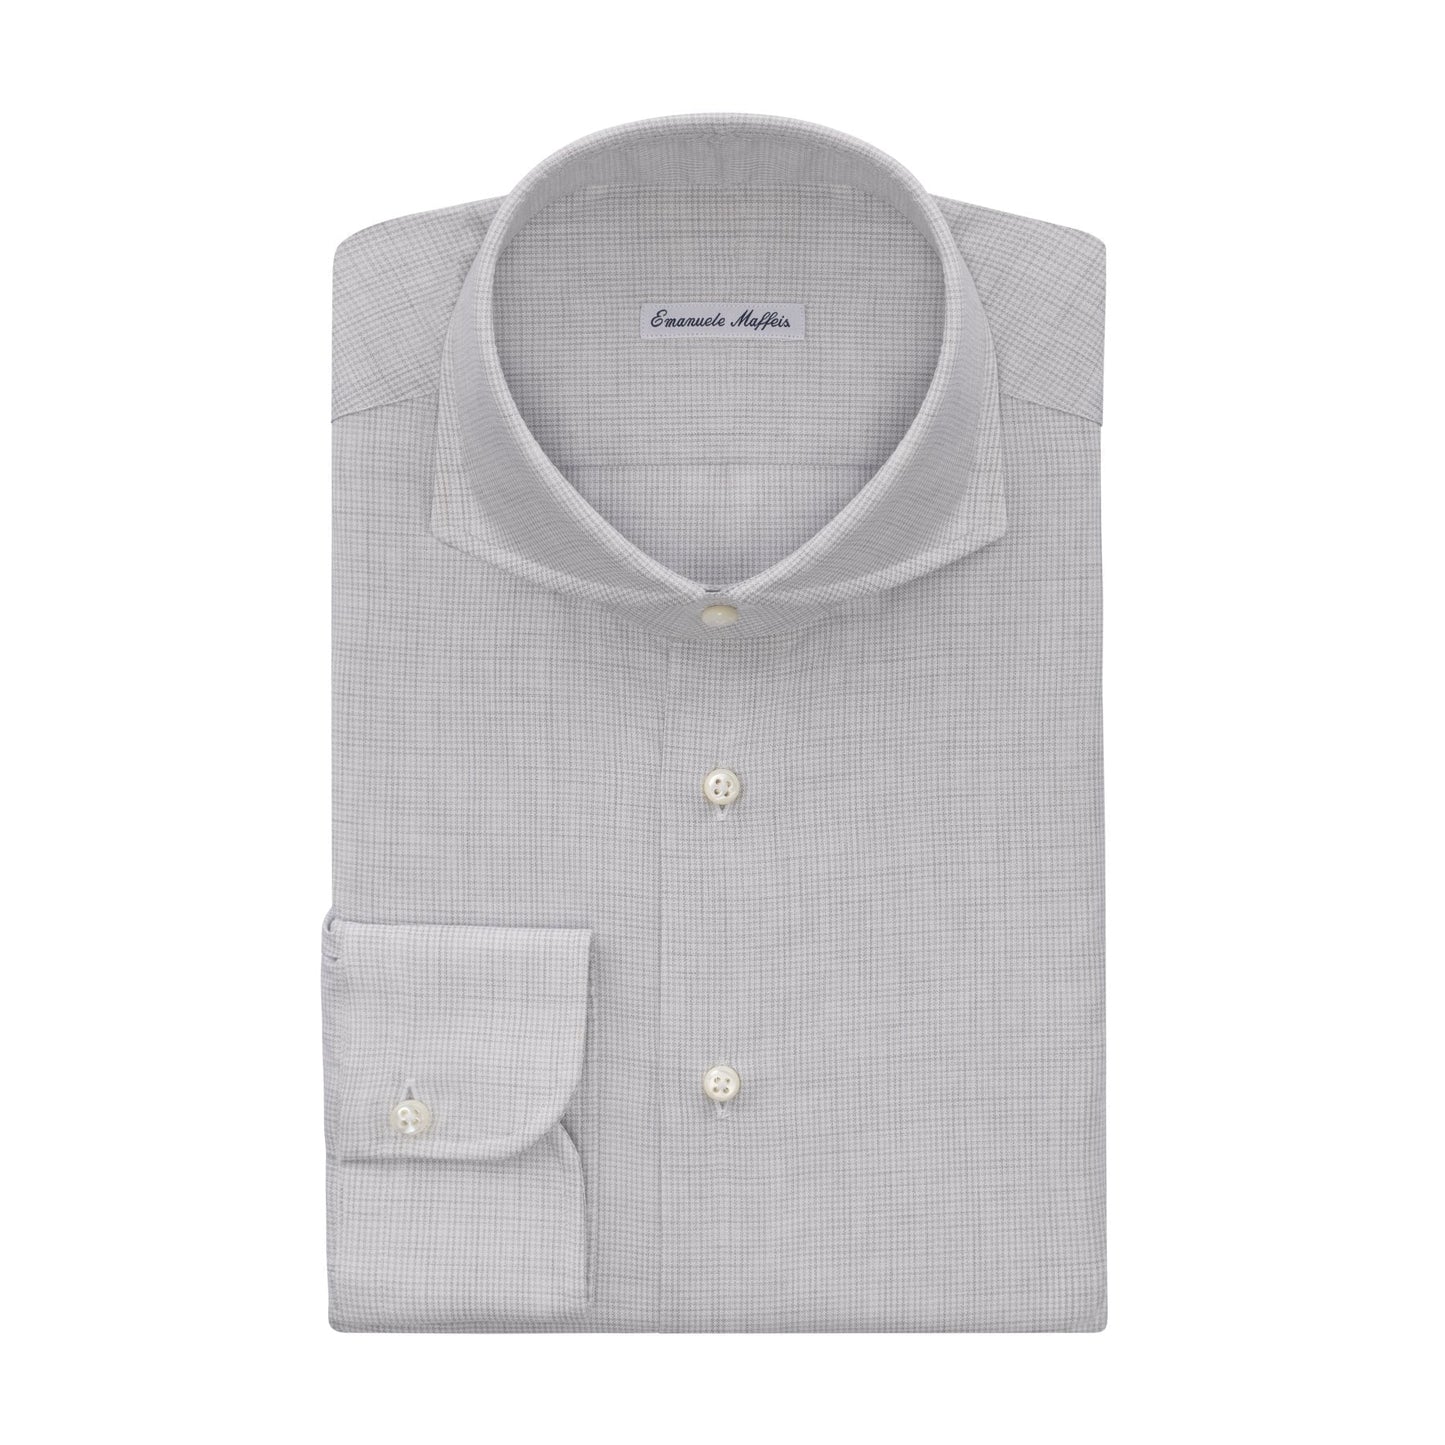 Emanuele Maffeis Houndstooth Cotton Light Grey Shirt with Shark Collar - SARTALE